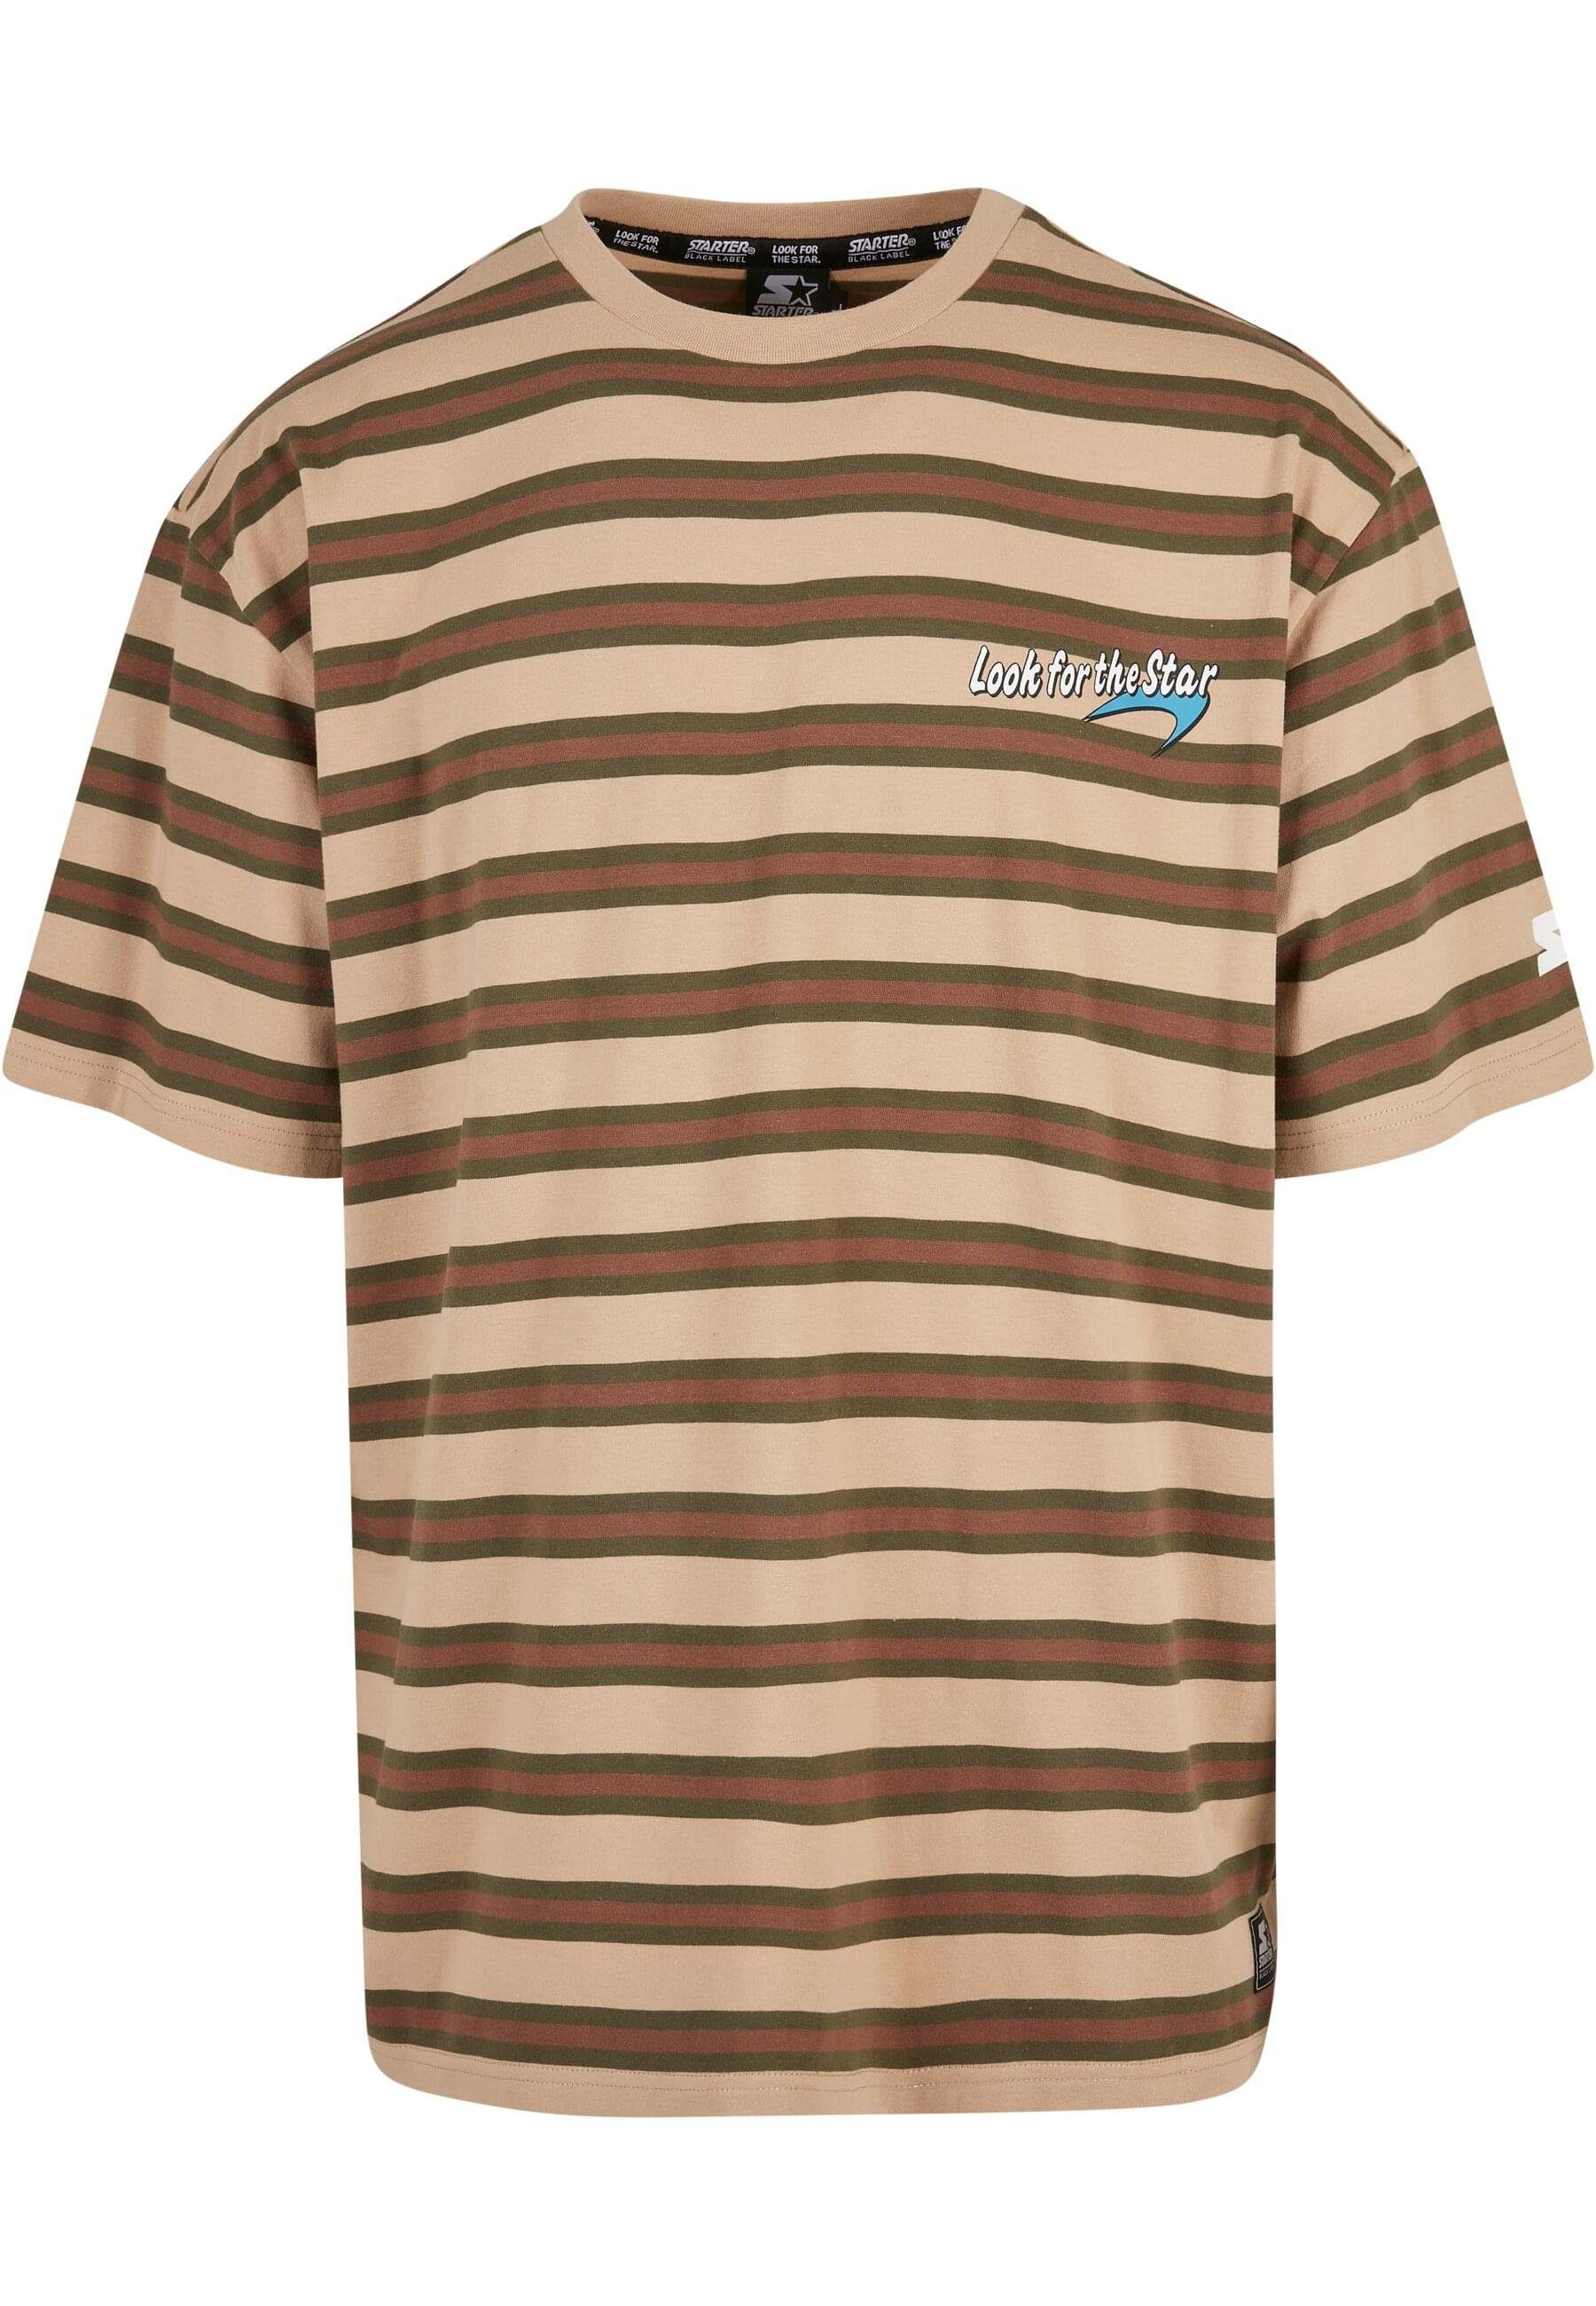 Starter Black Label T-Shirt for Oversize unionbeige/darkolive/bark Striped Look Starter (1-tlg) the Herren Tee Star